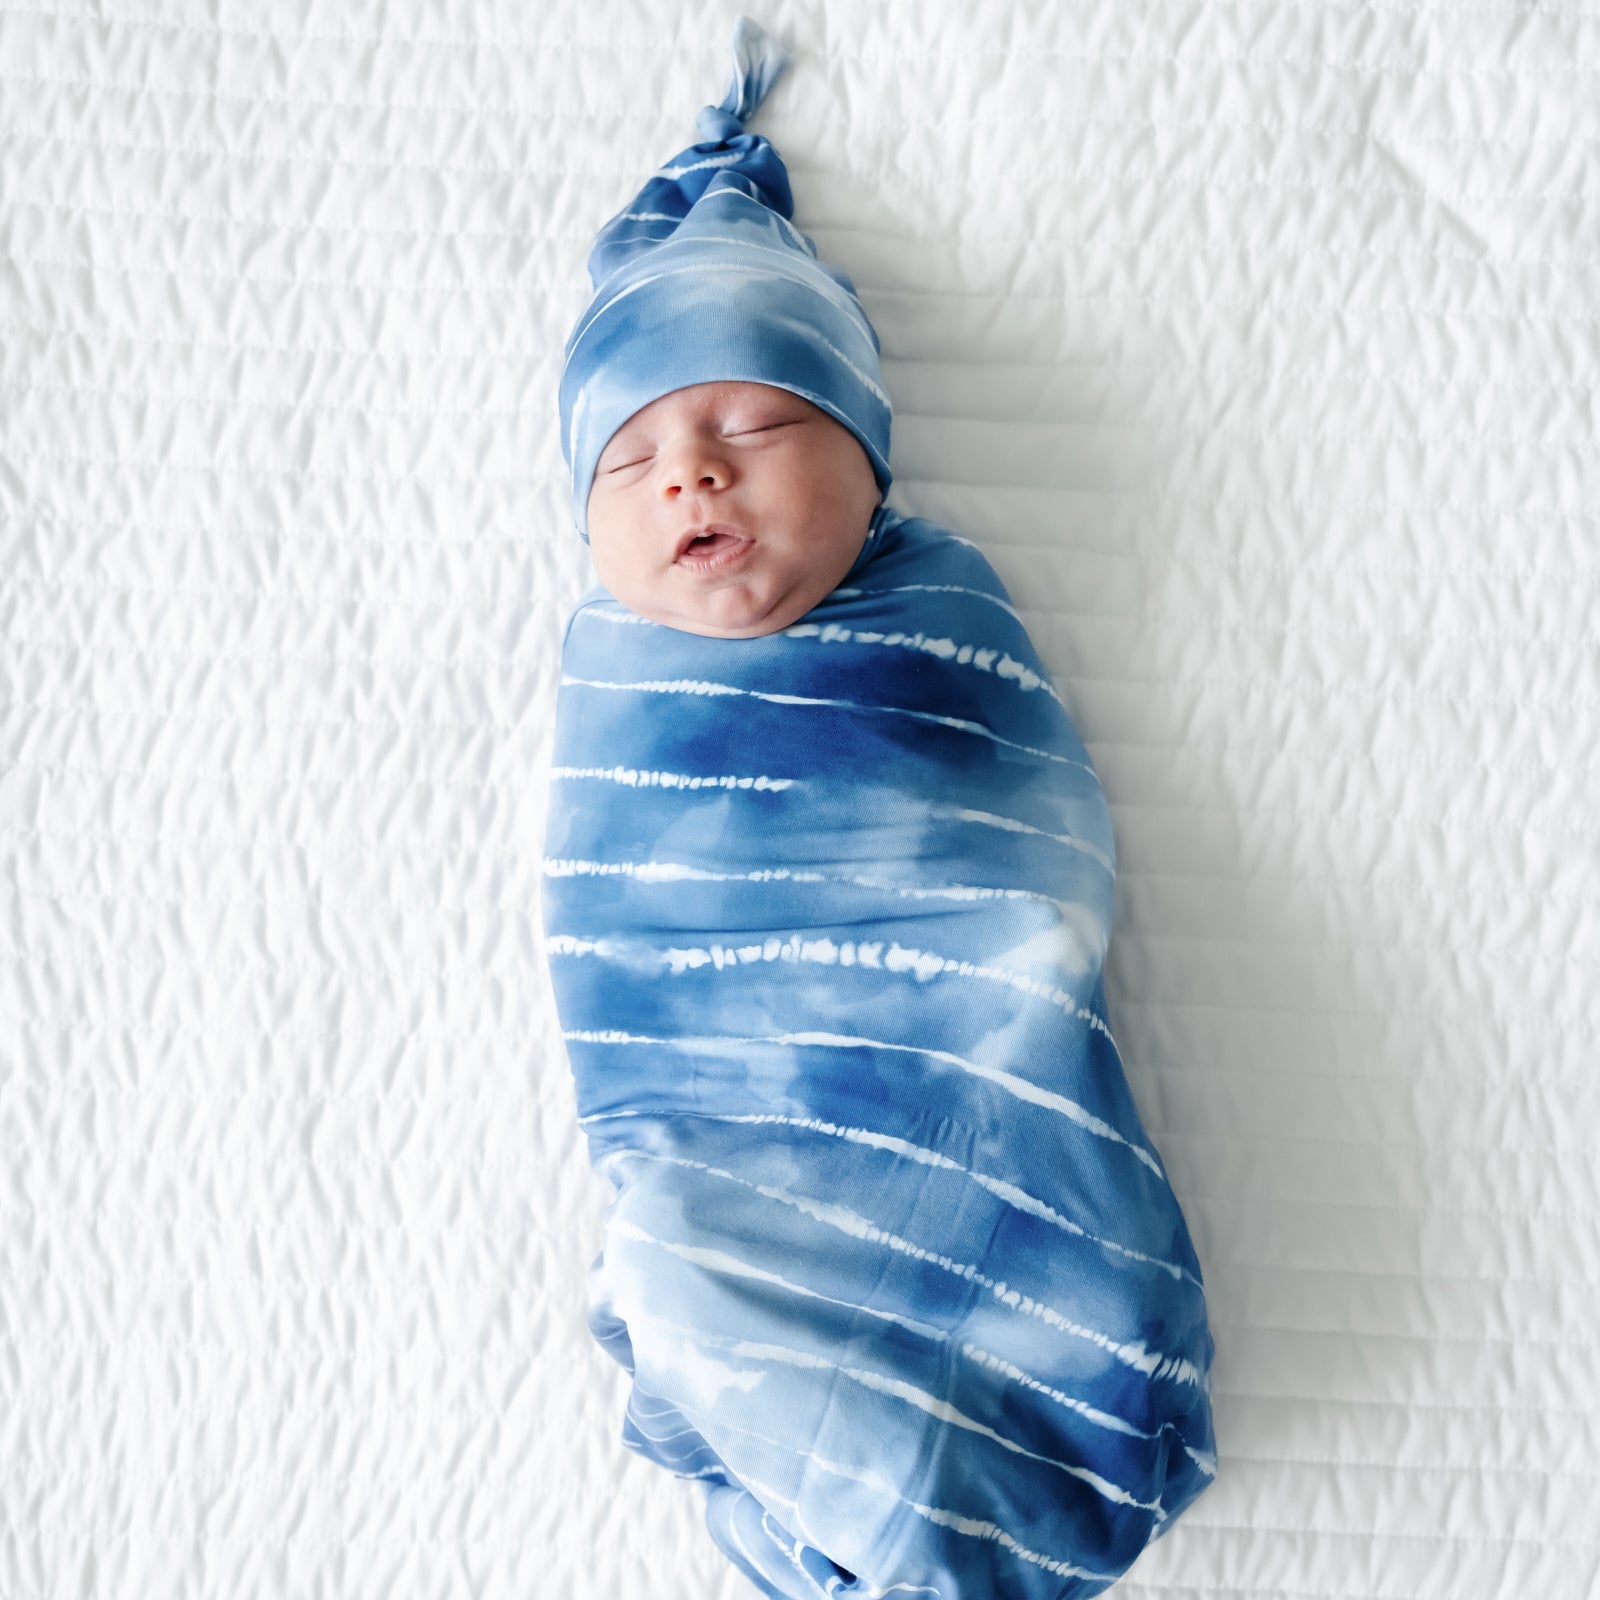 Infant swaddled in a Blue Tie Dye Dreams swaddle & hat set